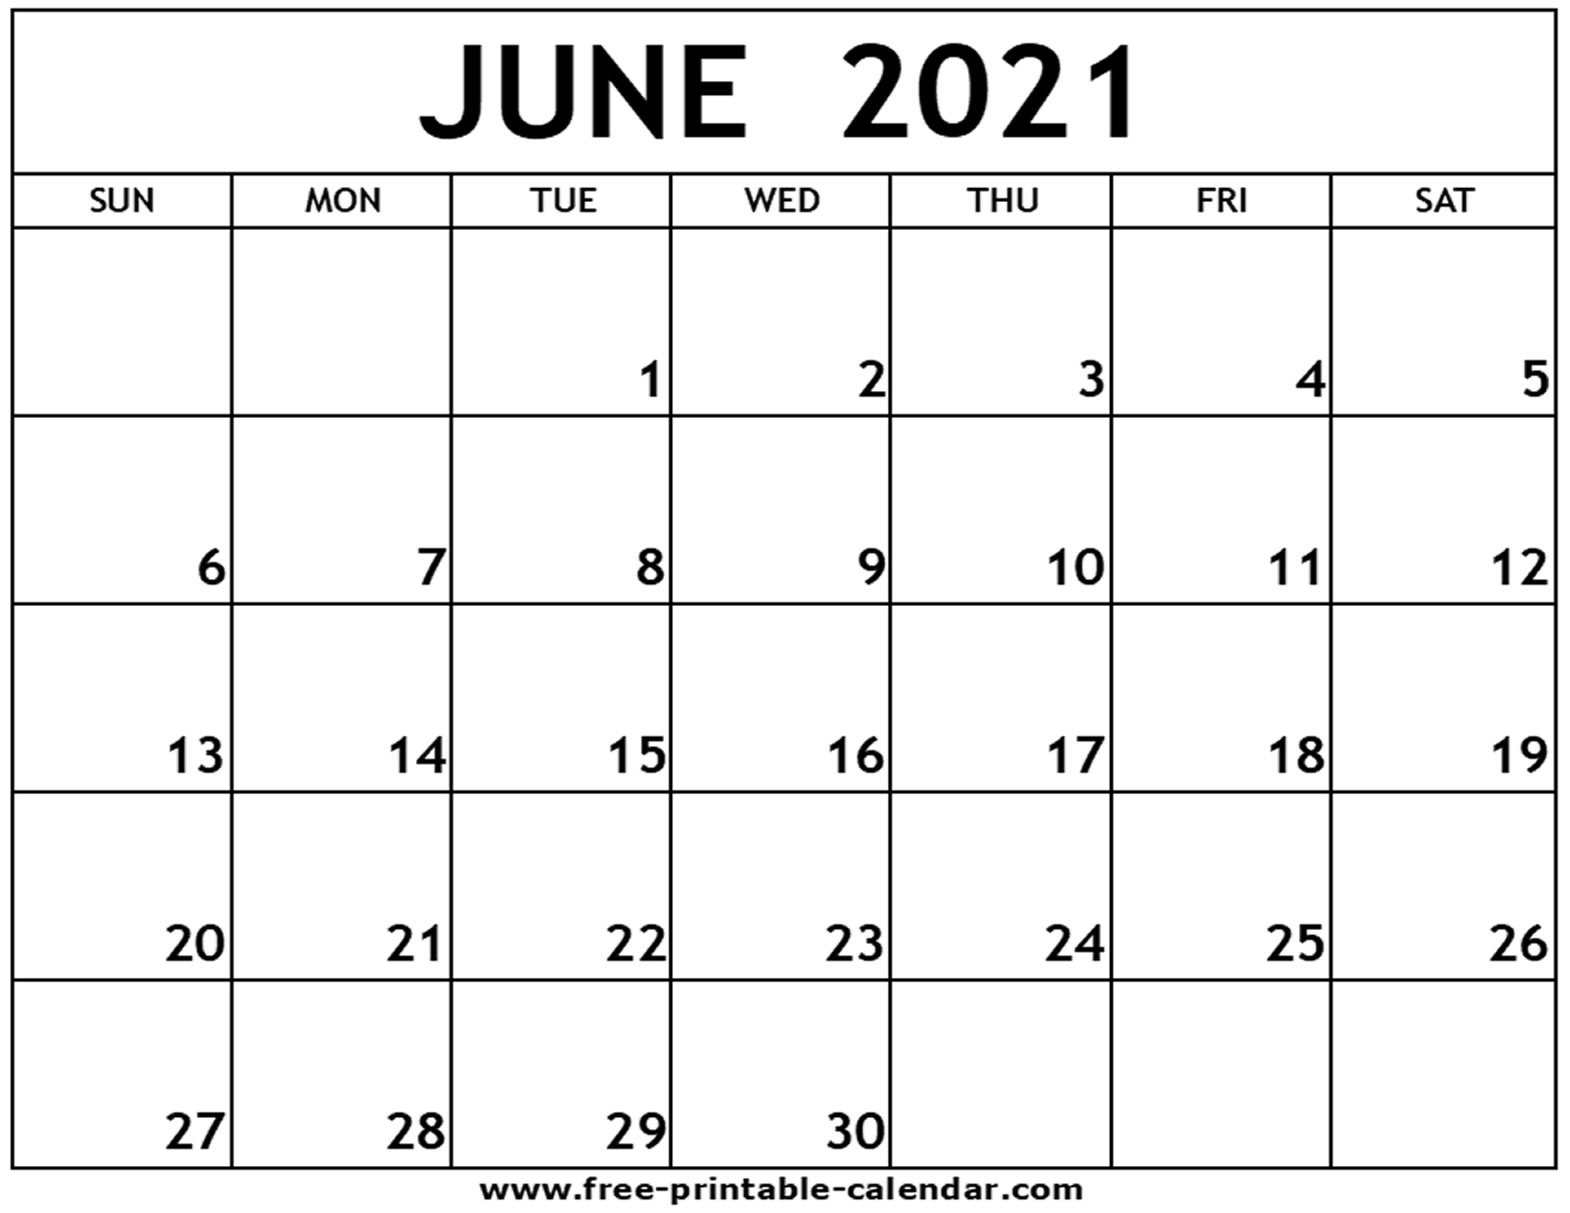 June 2021 Printable Calendar - Free-Printable-Calendar